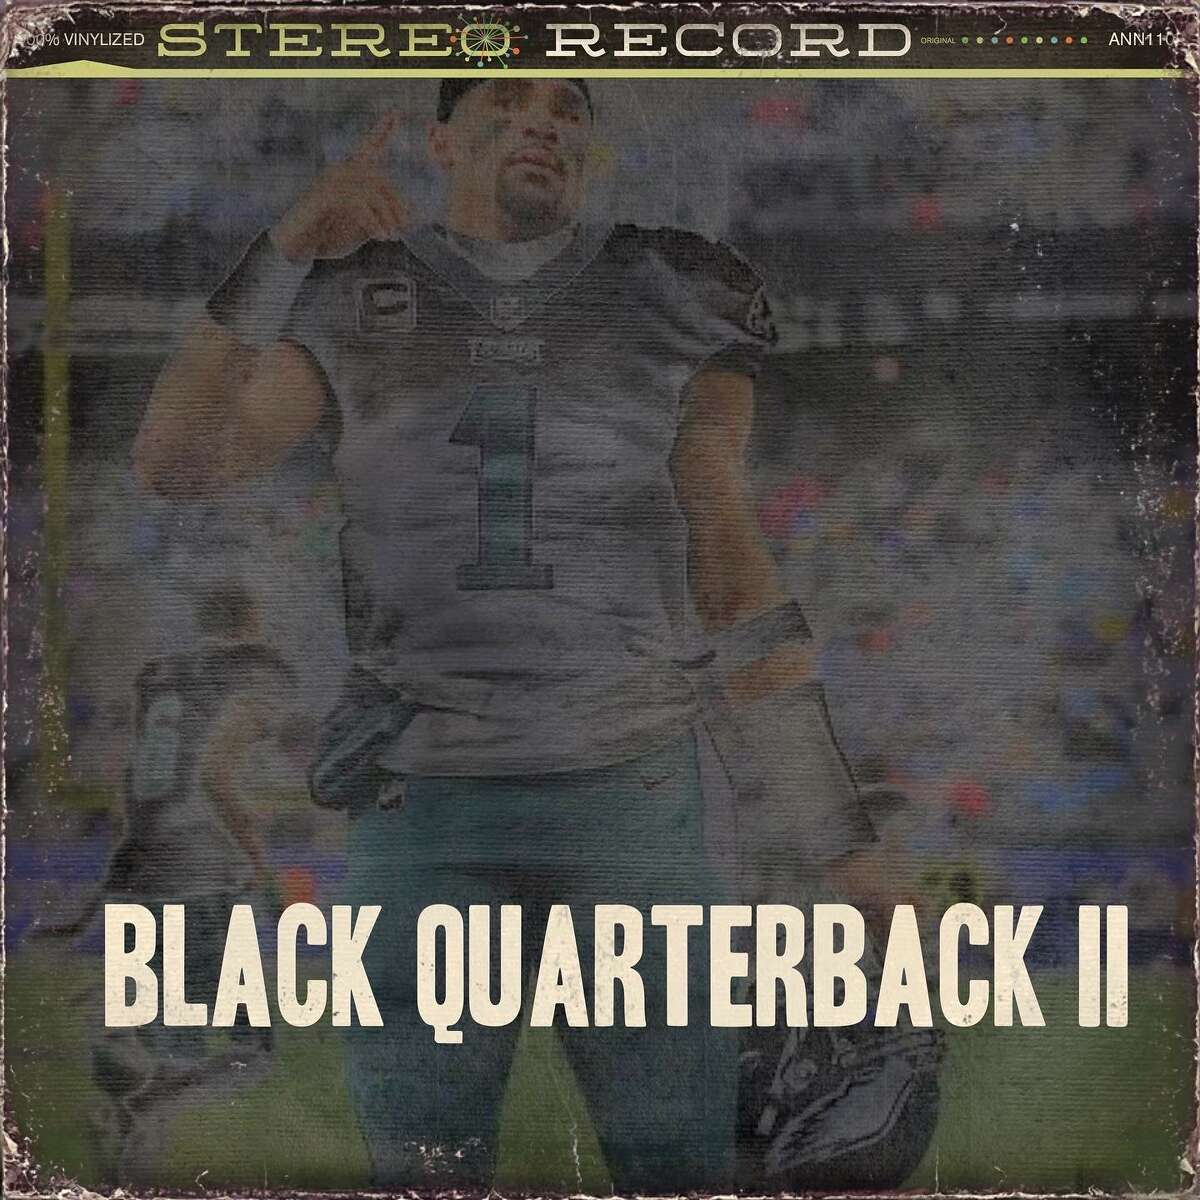 Simon Grimes' late 2022 release "Black Quarterback II."